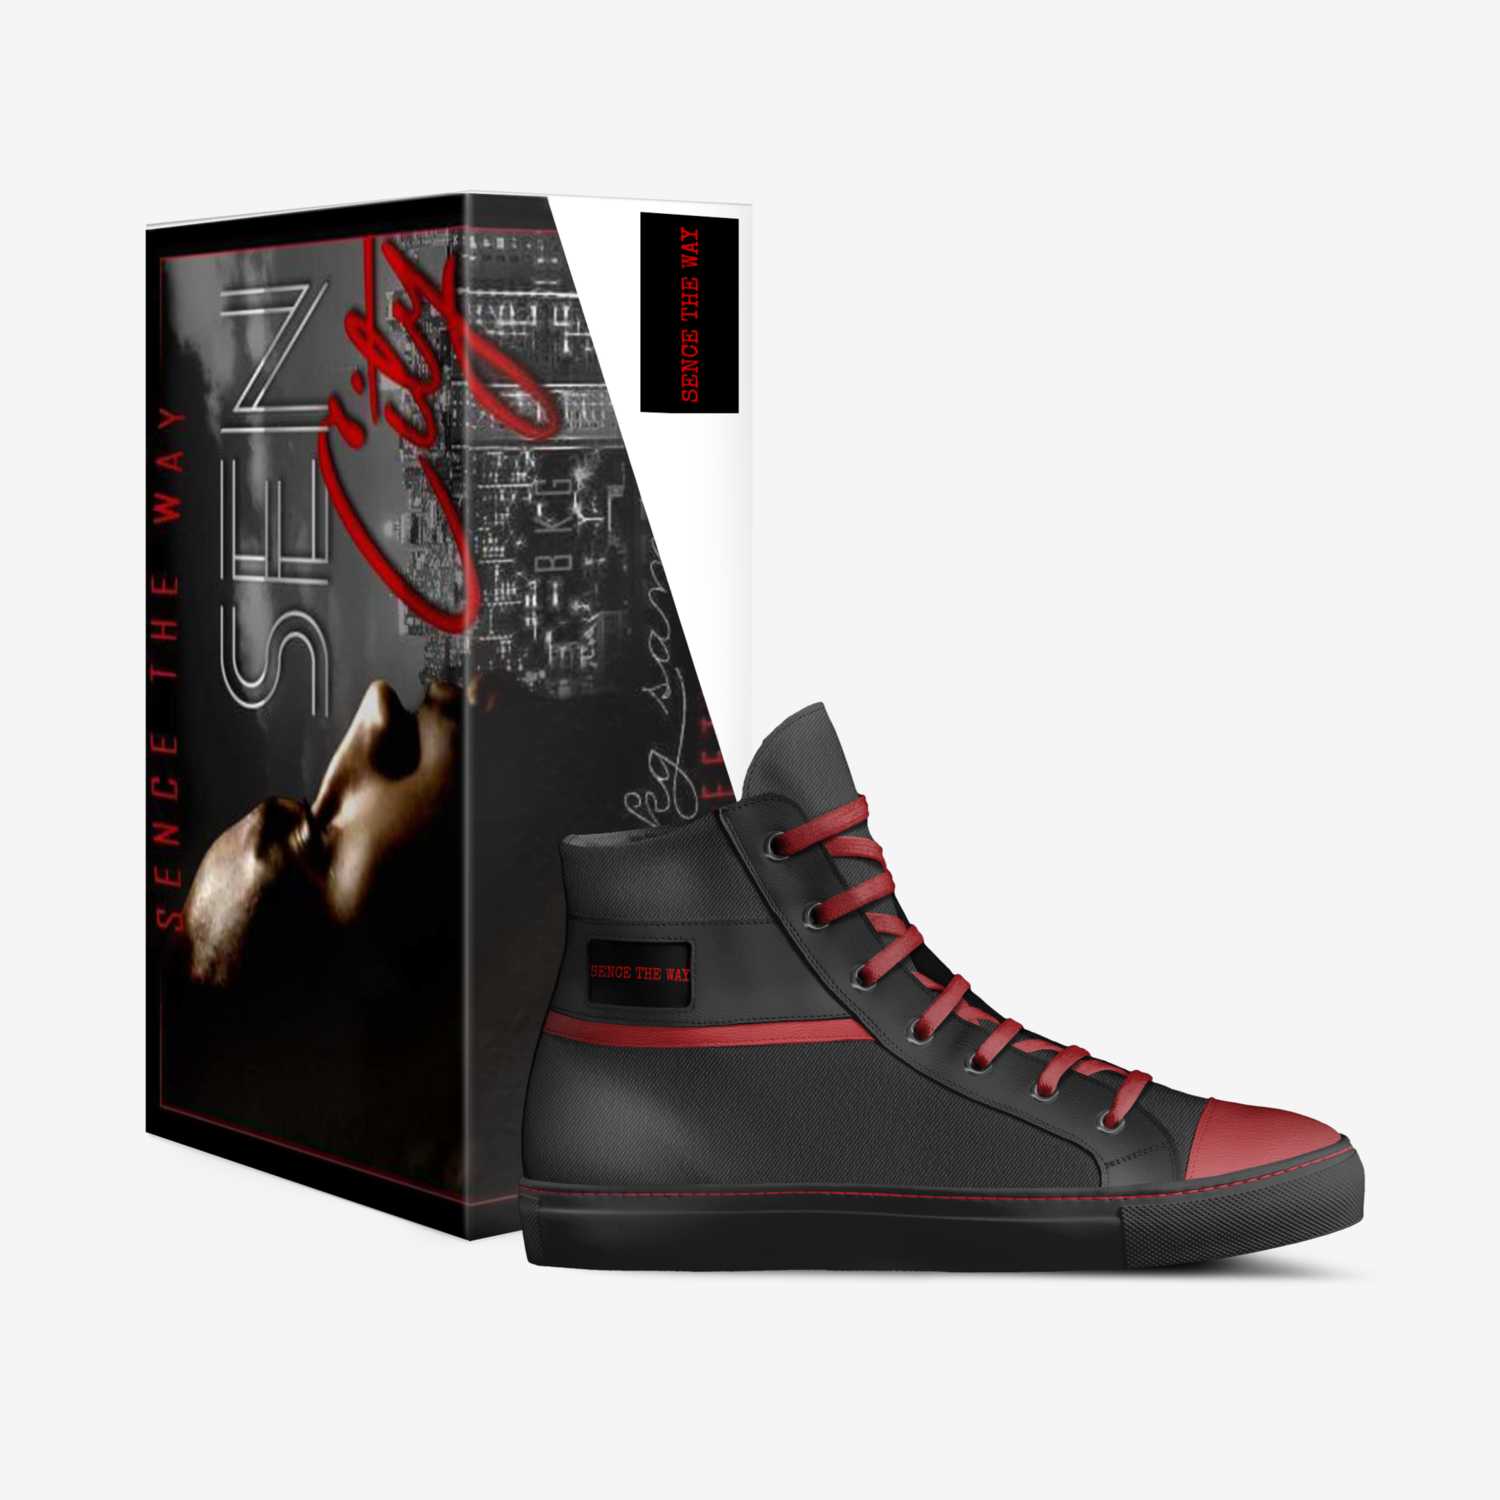 S.E.N.C.I.T.Y. custom made in Italy shoes by Cedric.bellamy84 Bellamy | Box view